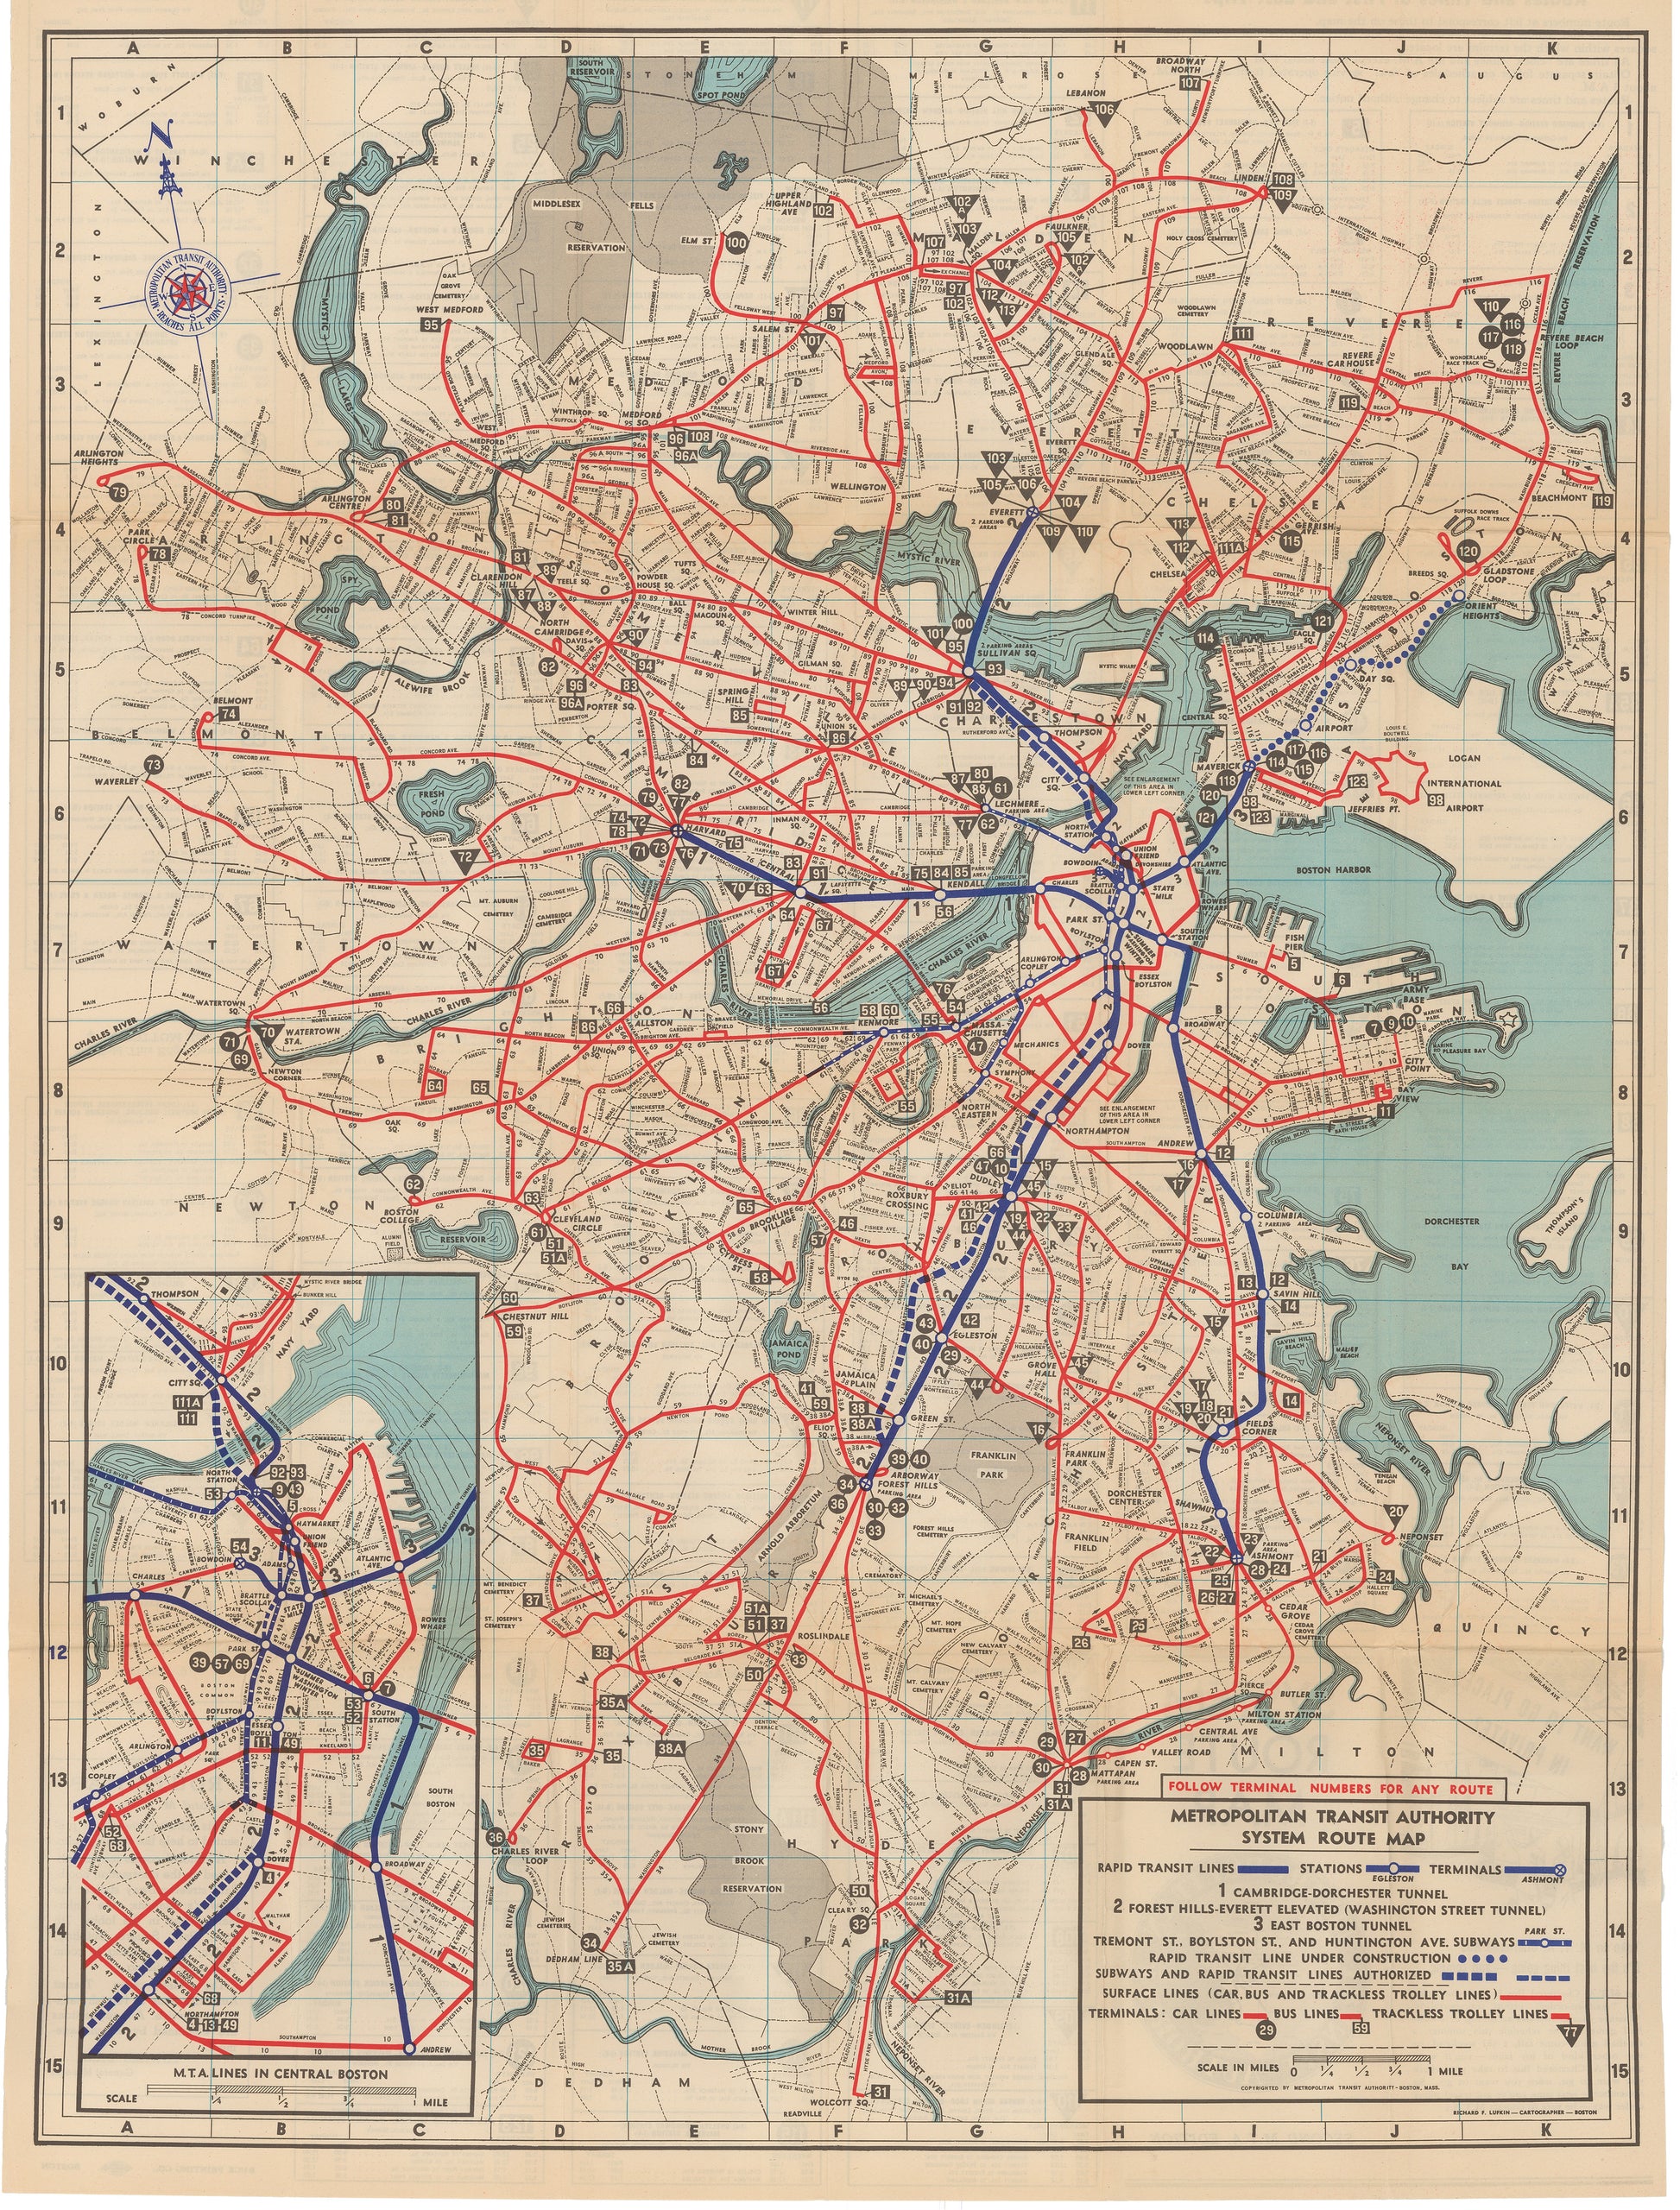 1951 MTA System Map No. 2